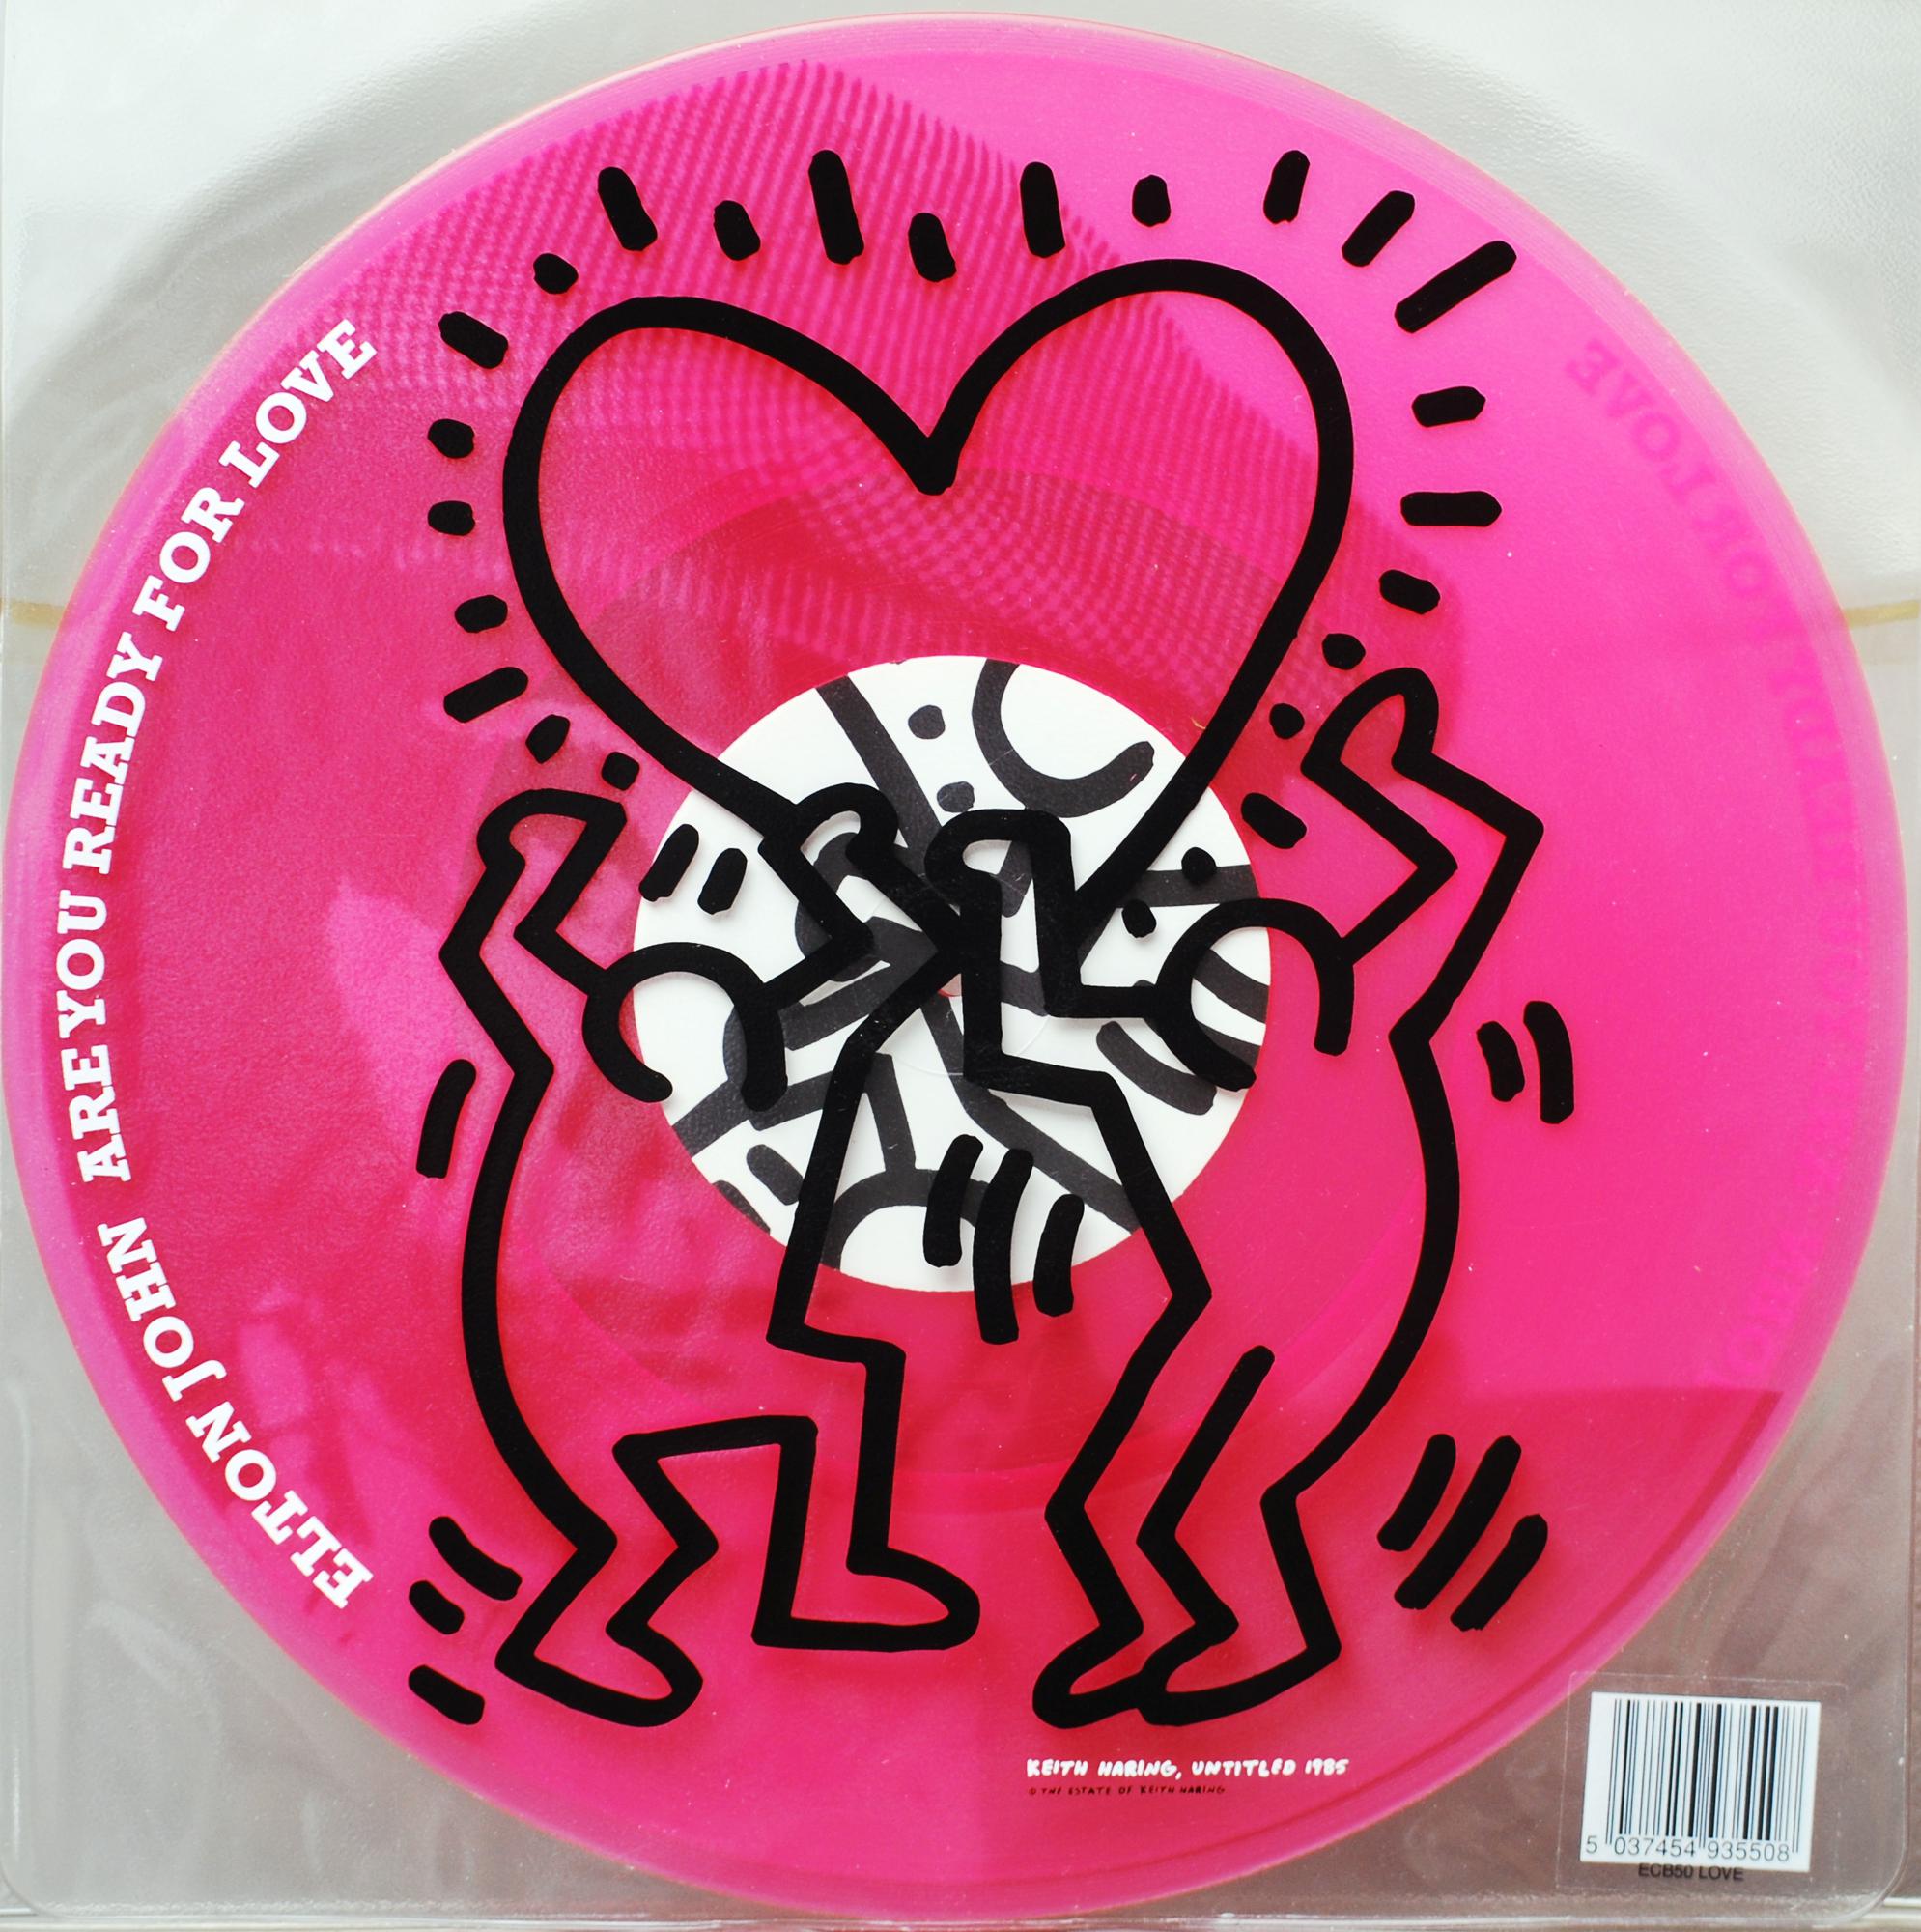 Keith Haring ARE YOU READY FOR LOVE LP 45 giri di Elton John lato a: Are You...